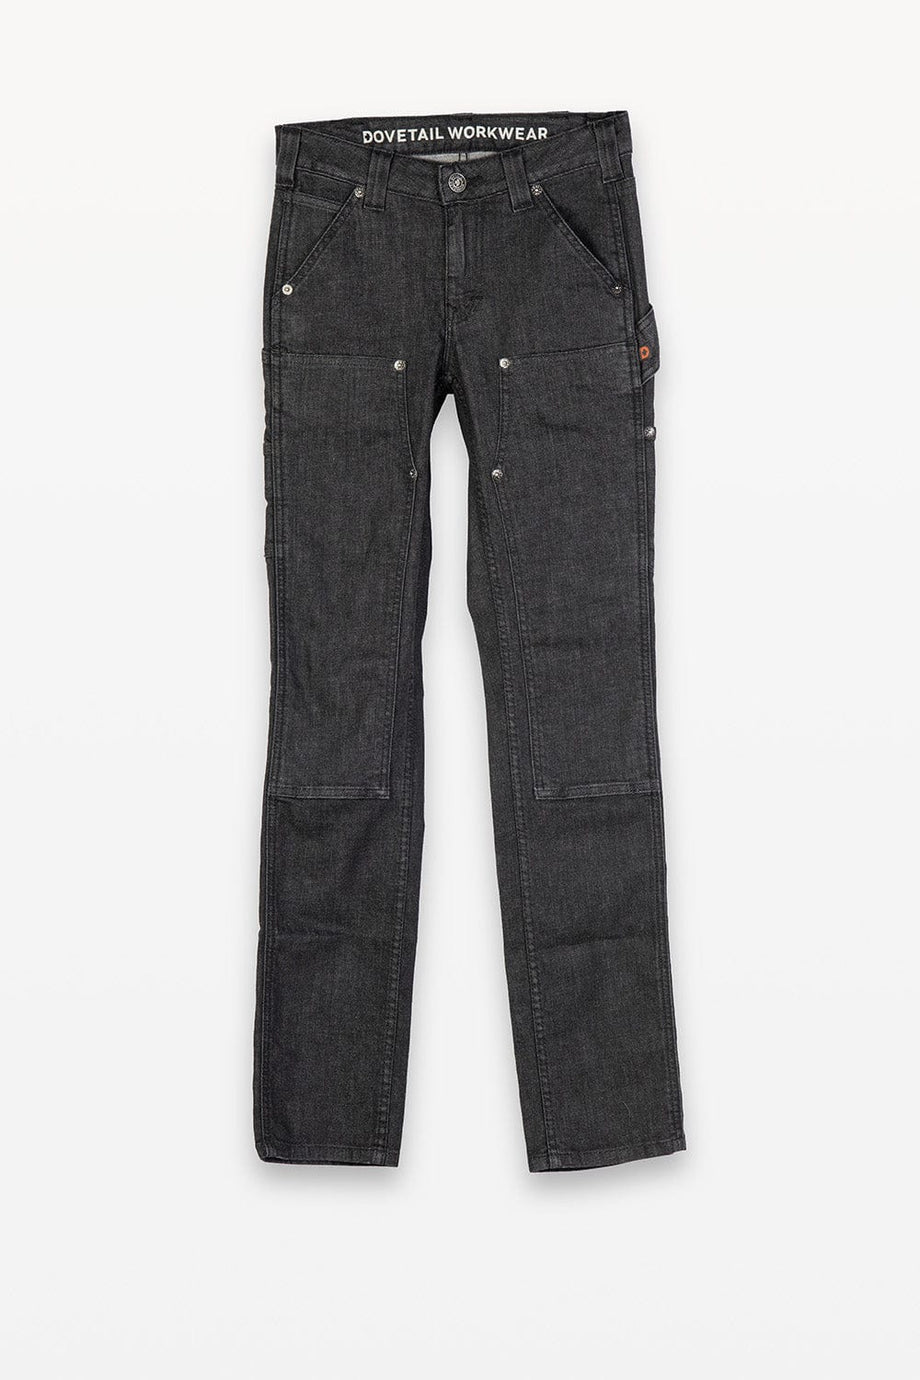 Dovetail Workwear Maven Slim Pants for Women, Slim Fit, 10 Pockets